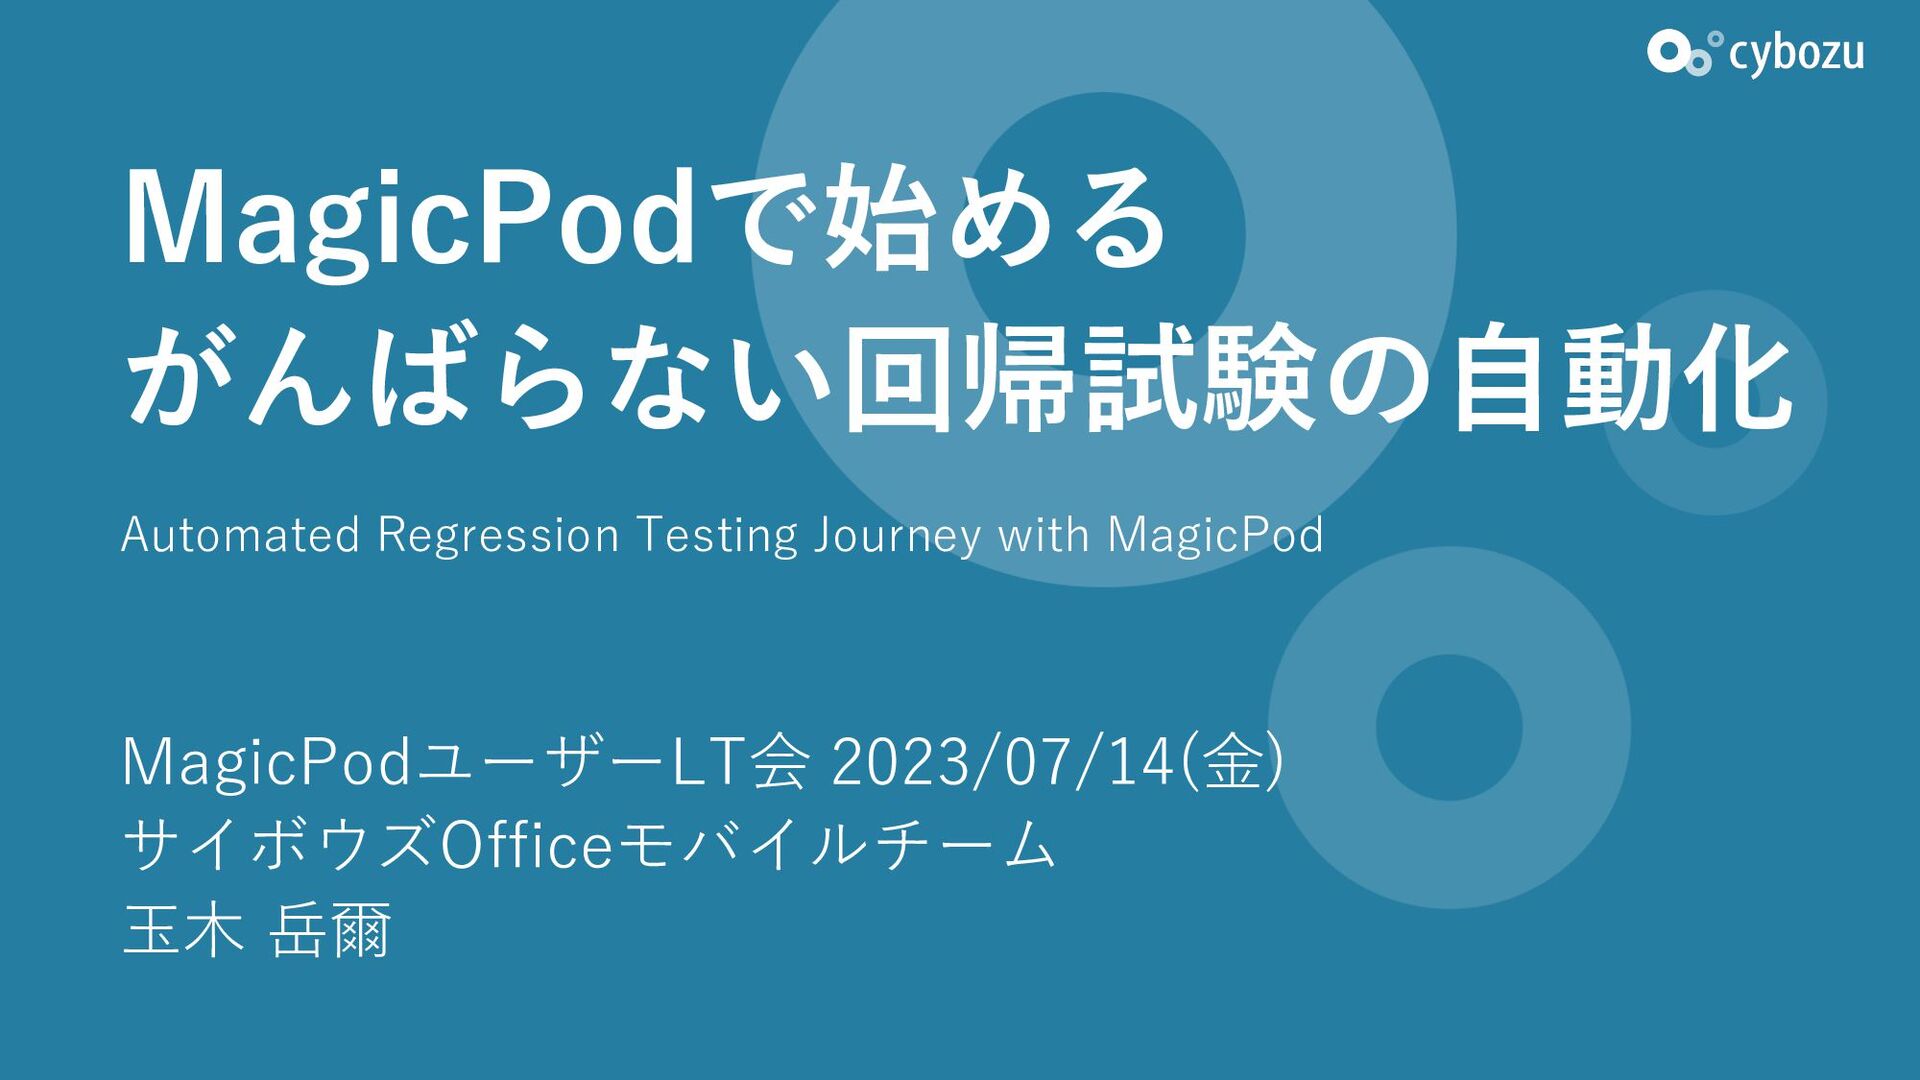 MagicPodで始めるがんばらない回帰試験の自動化​/Automated Regression Testing Journey with MagicPod​